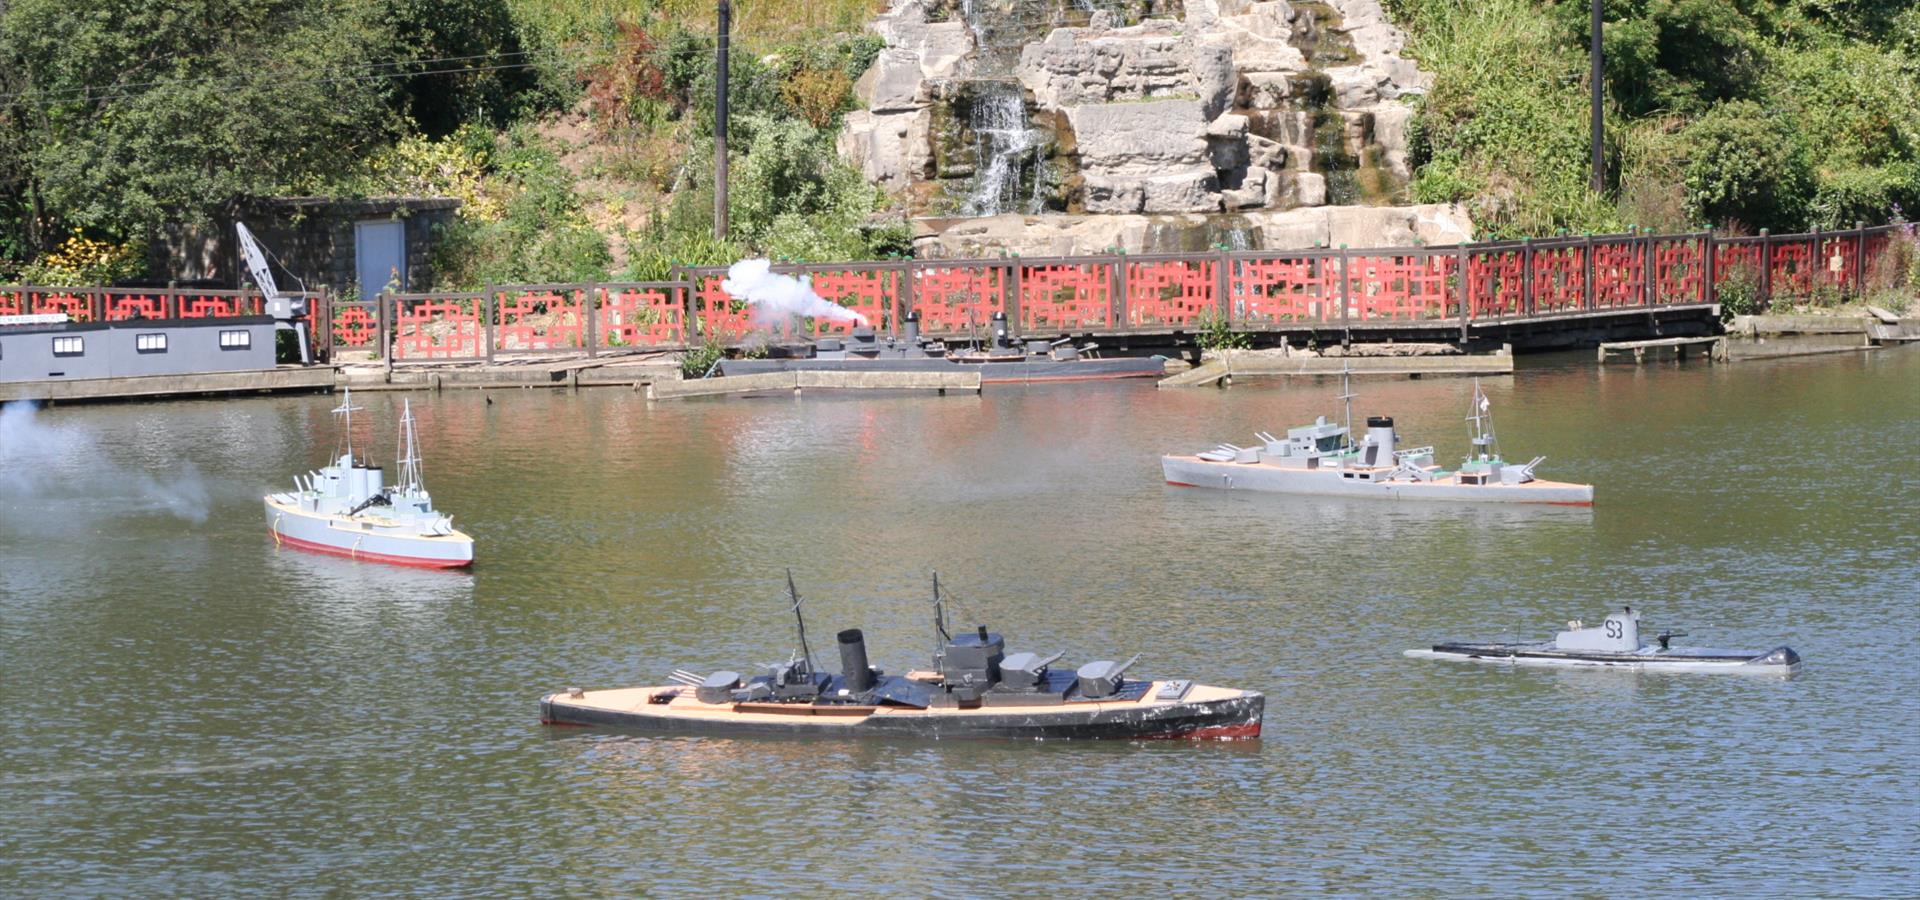 Miniature military boats on a pond